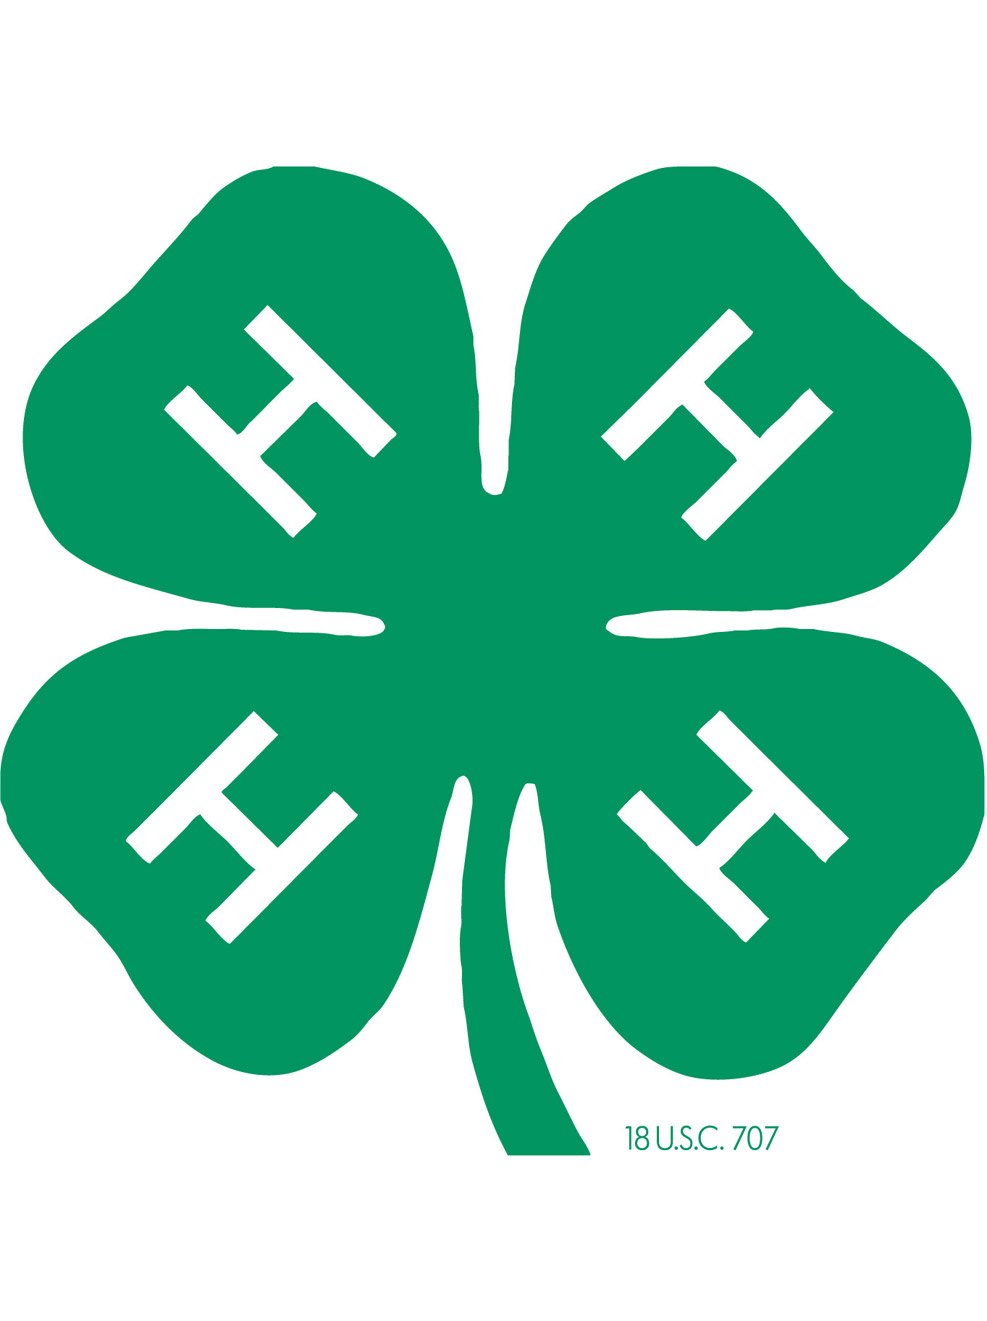 The 4-H Emblem